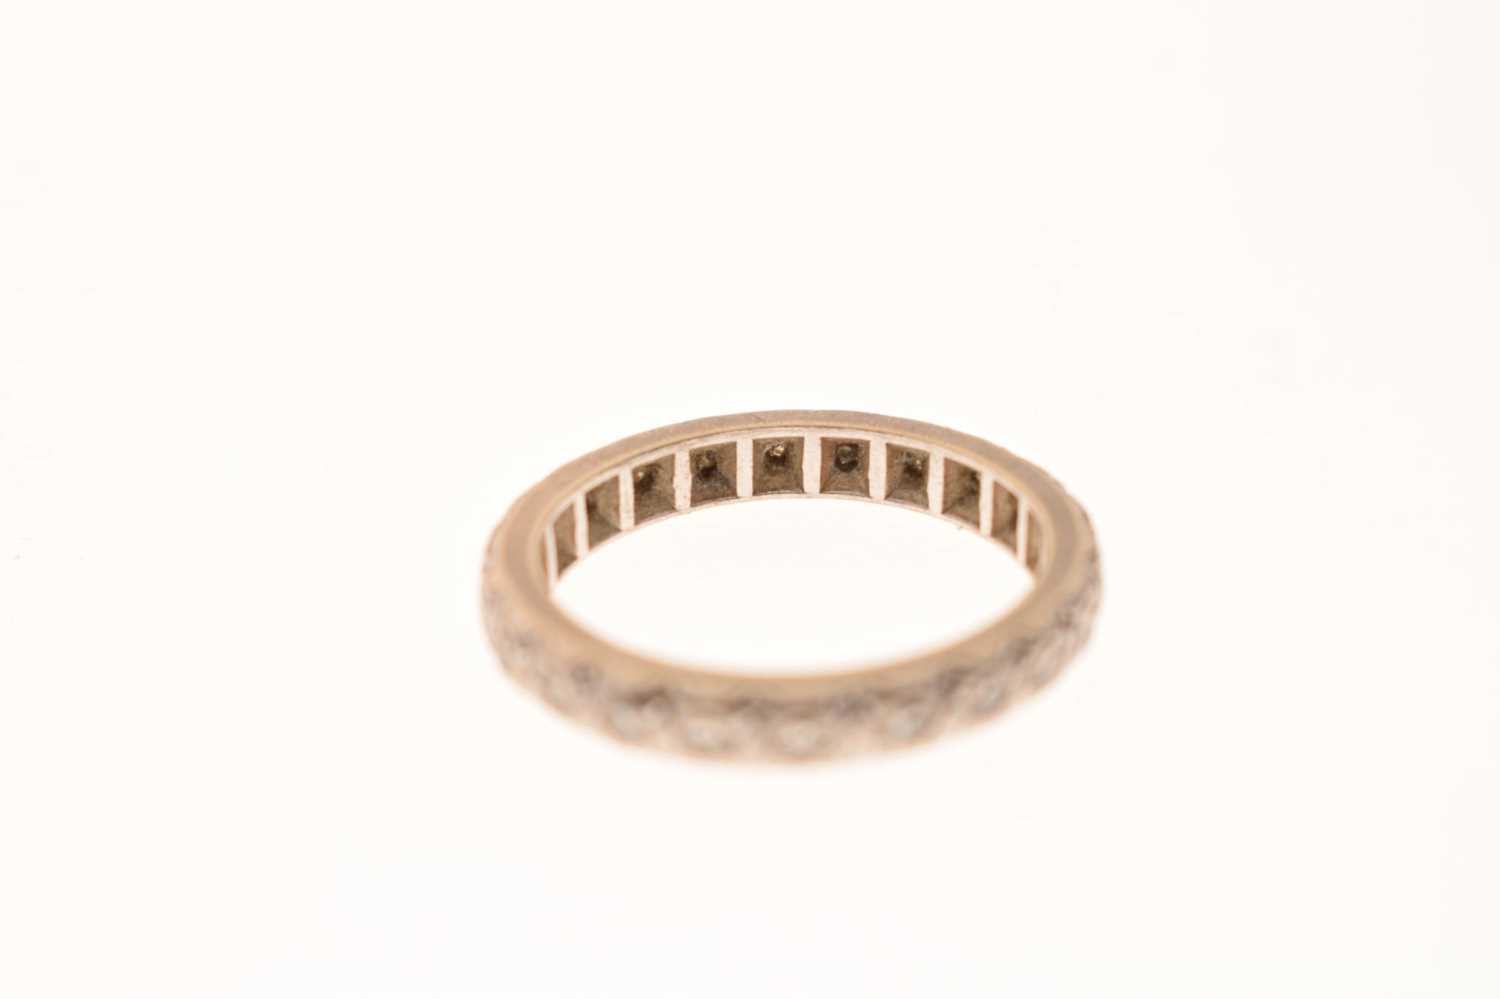 Full diamond eternity ring - Image 5 of 6